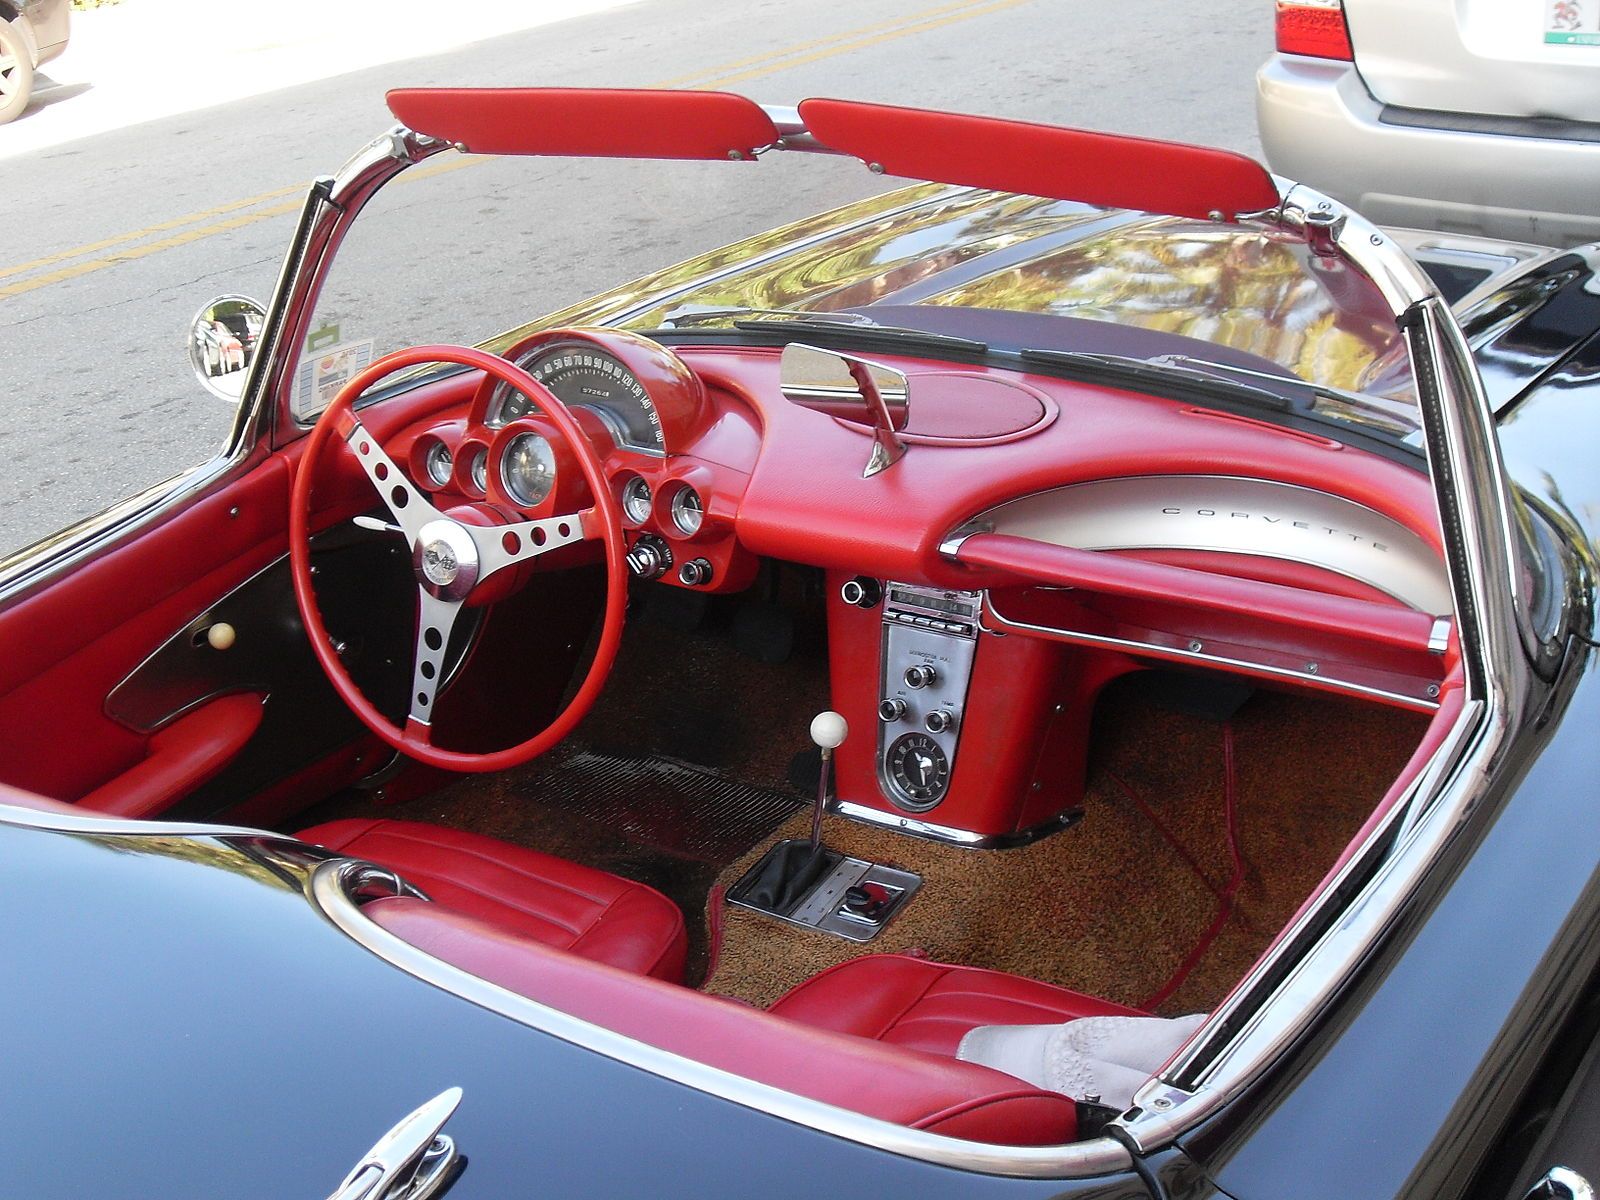 Red interior of Corvette